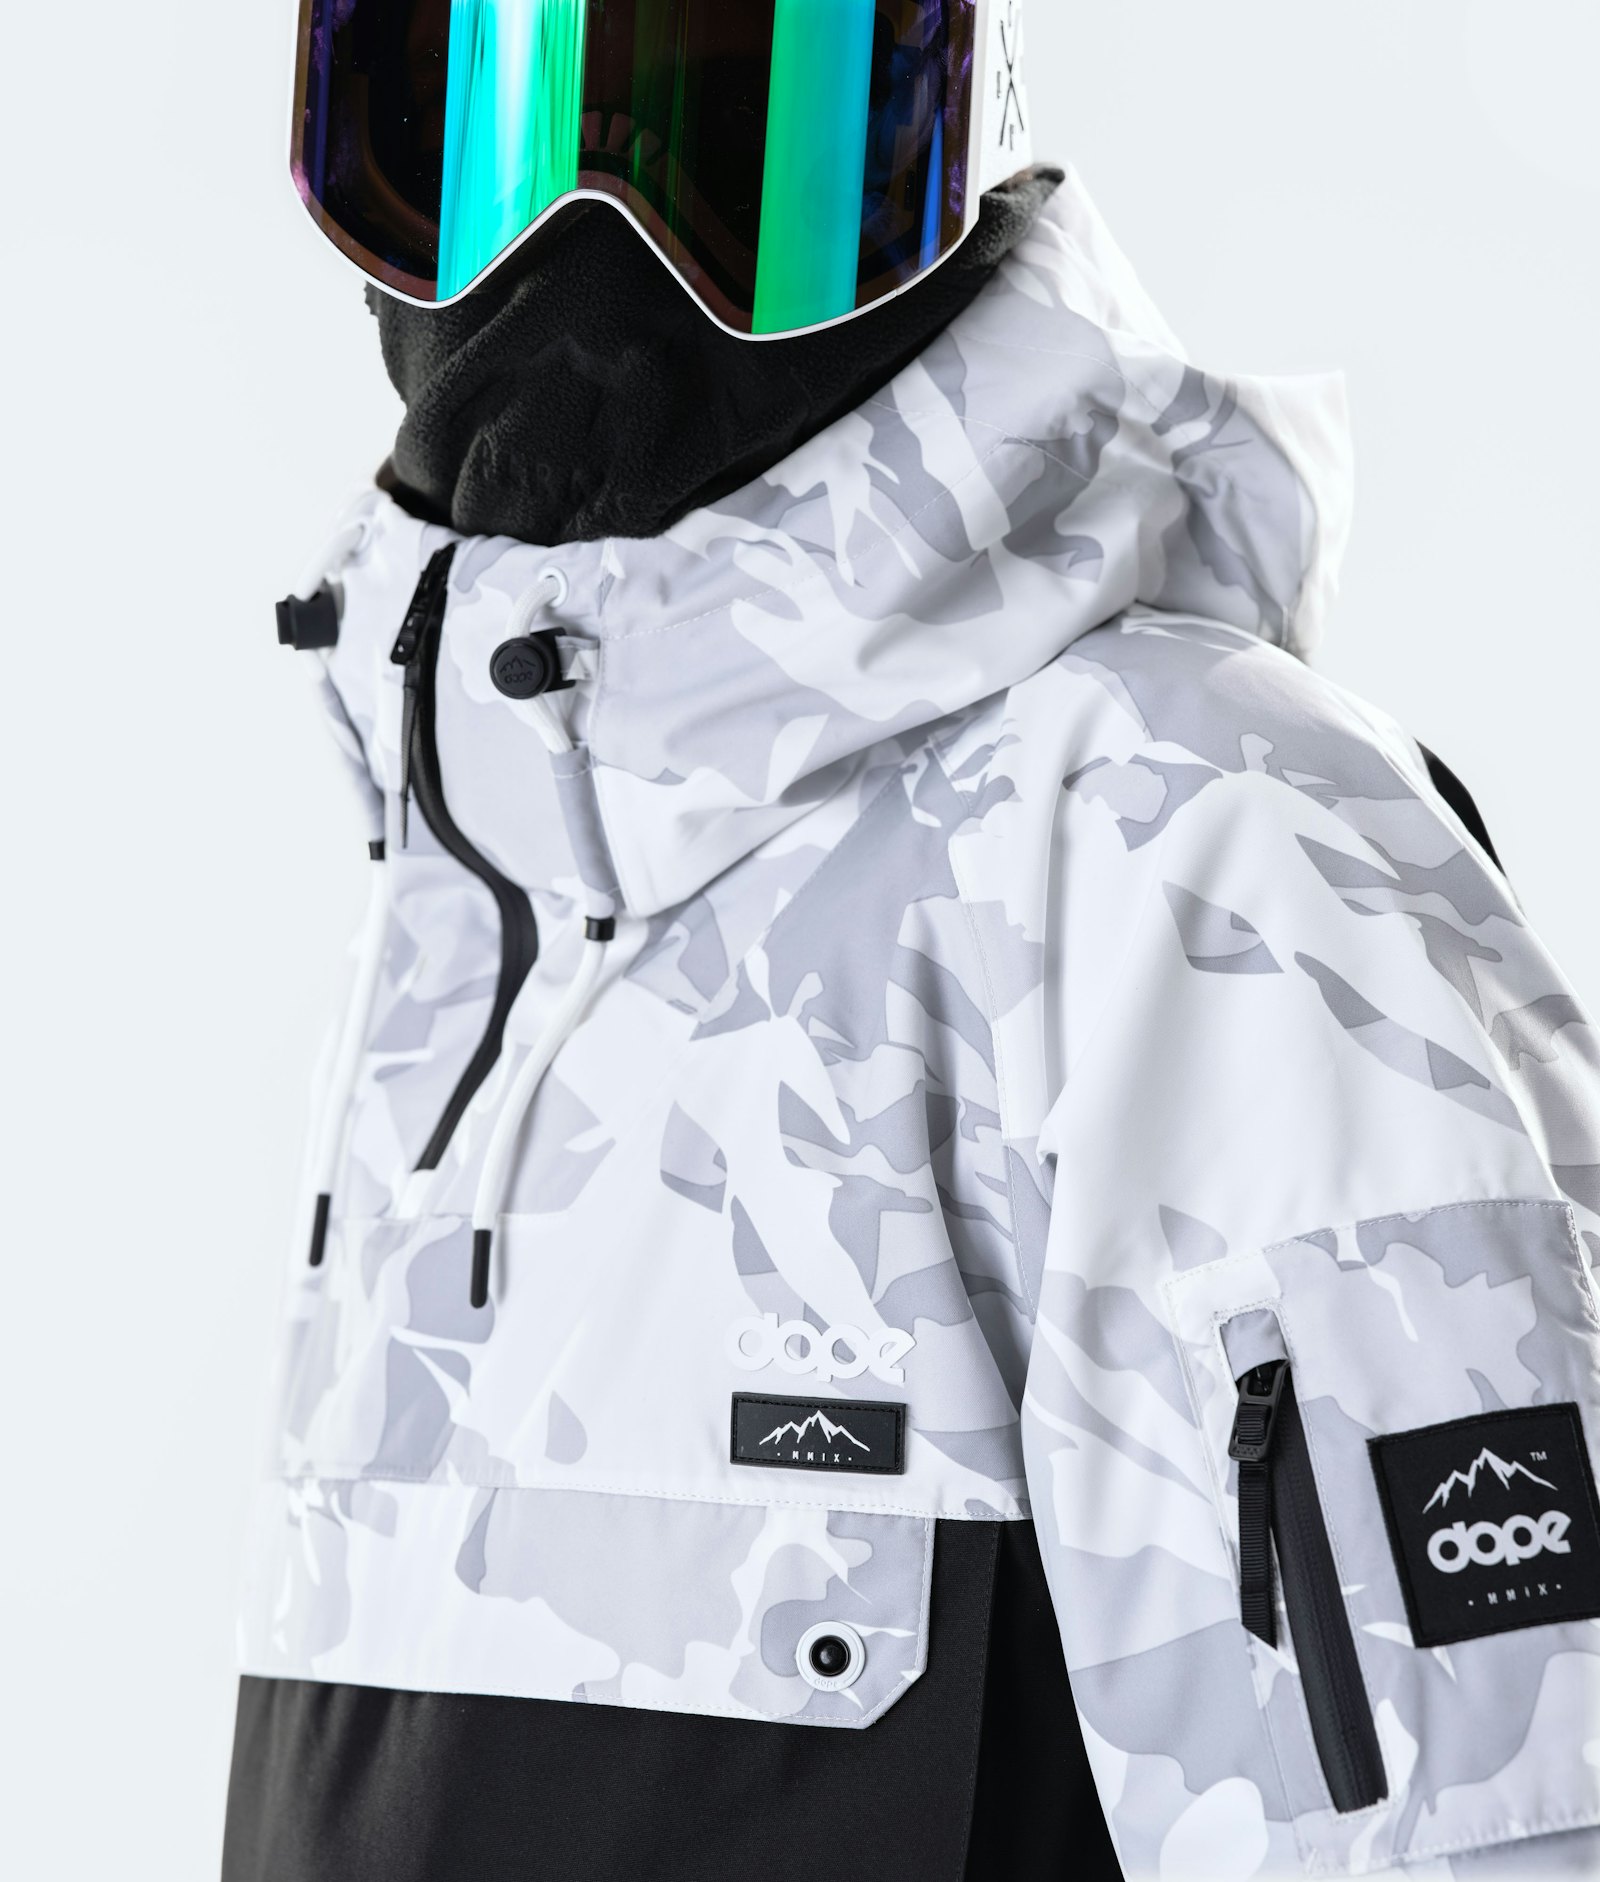 Annok 2020 Snowboard jas Heren Tucks Camo/Black